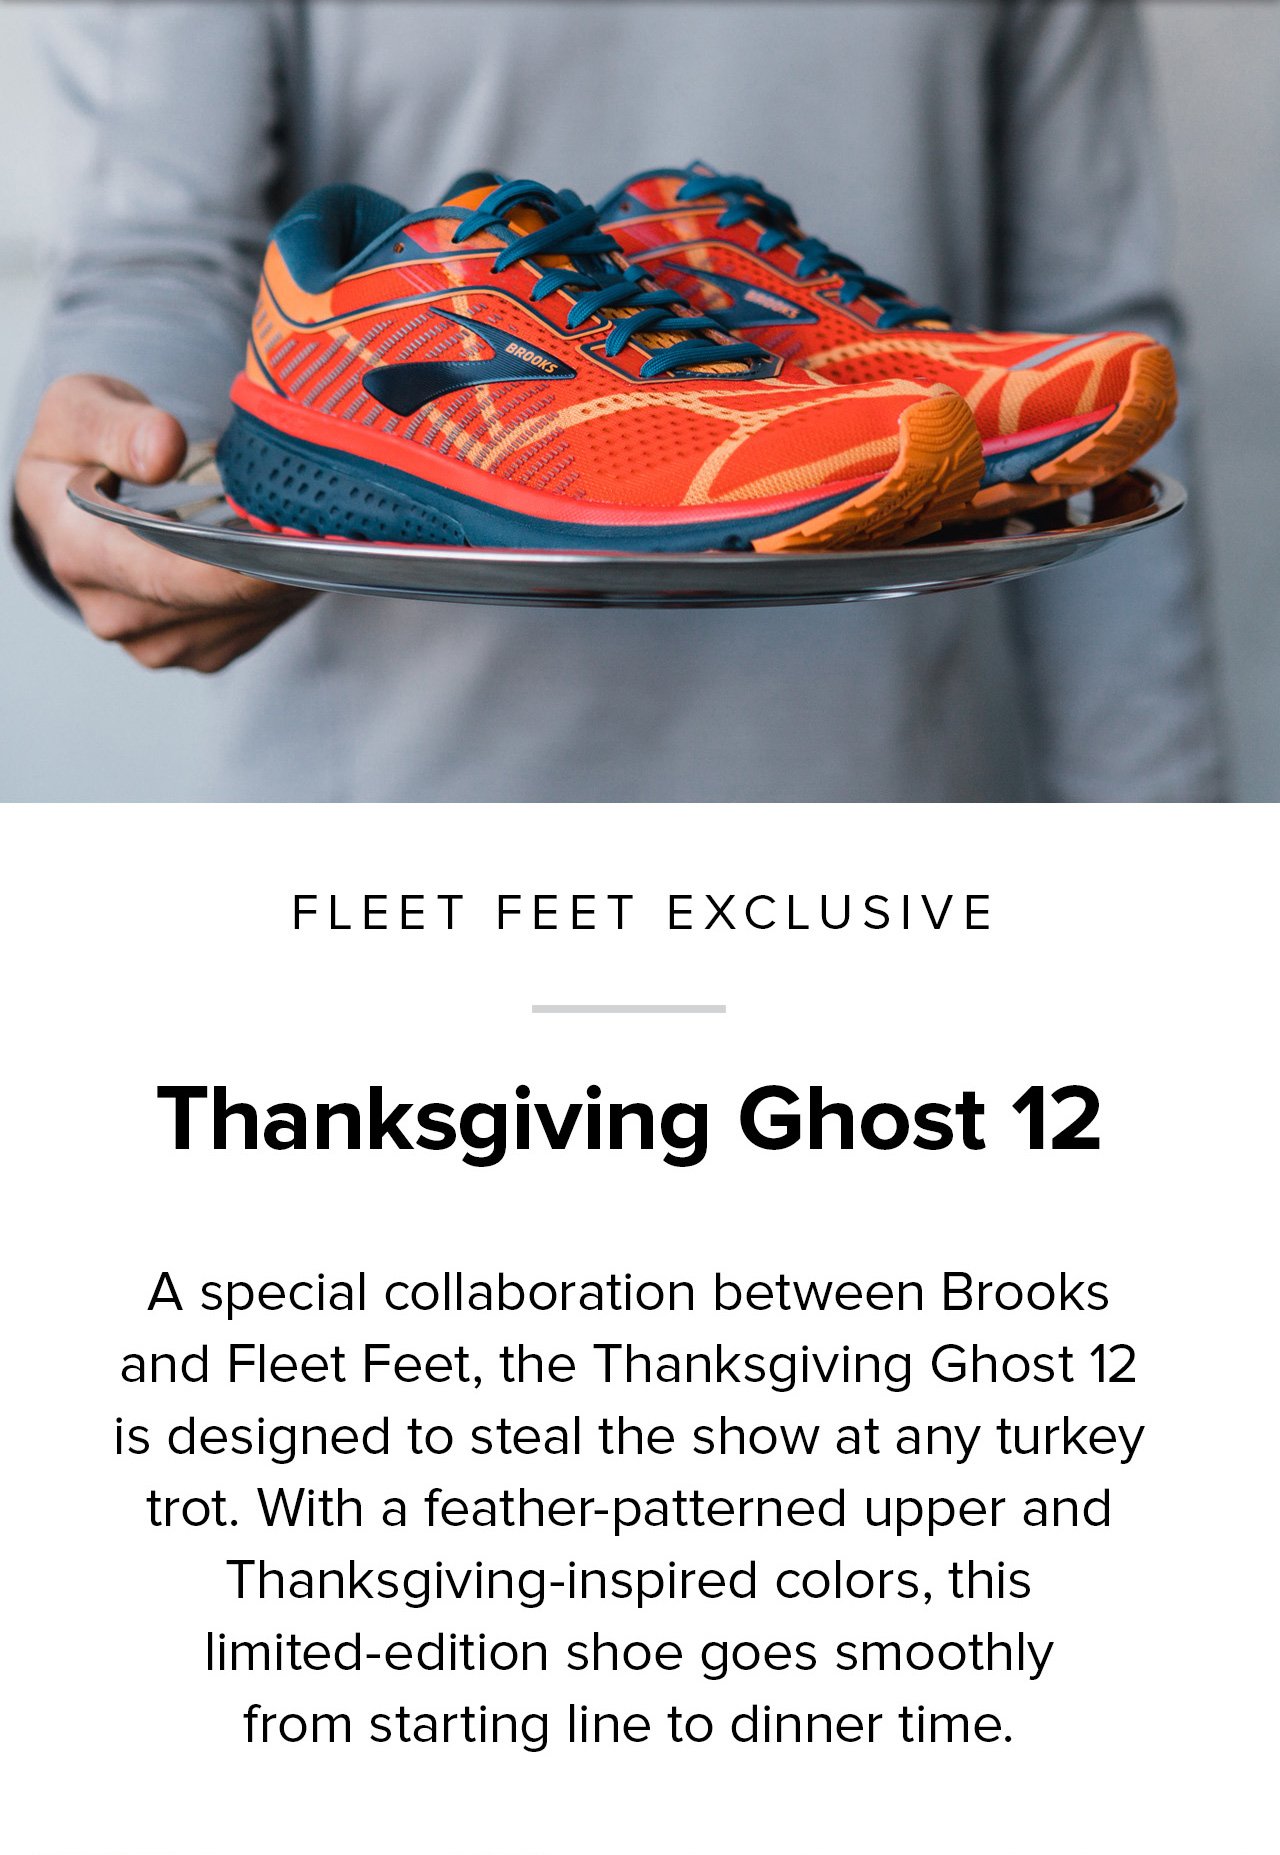 brooks turkey trot shoe